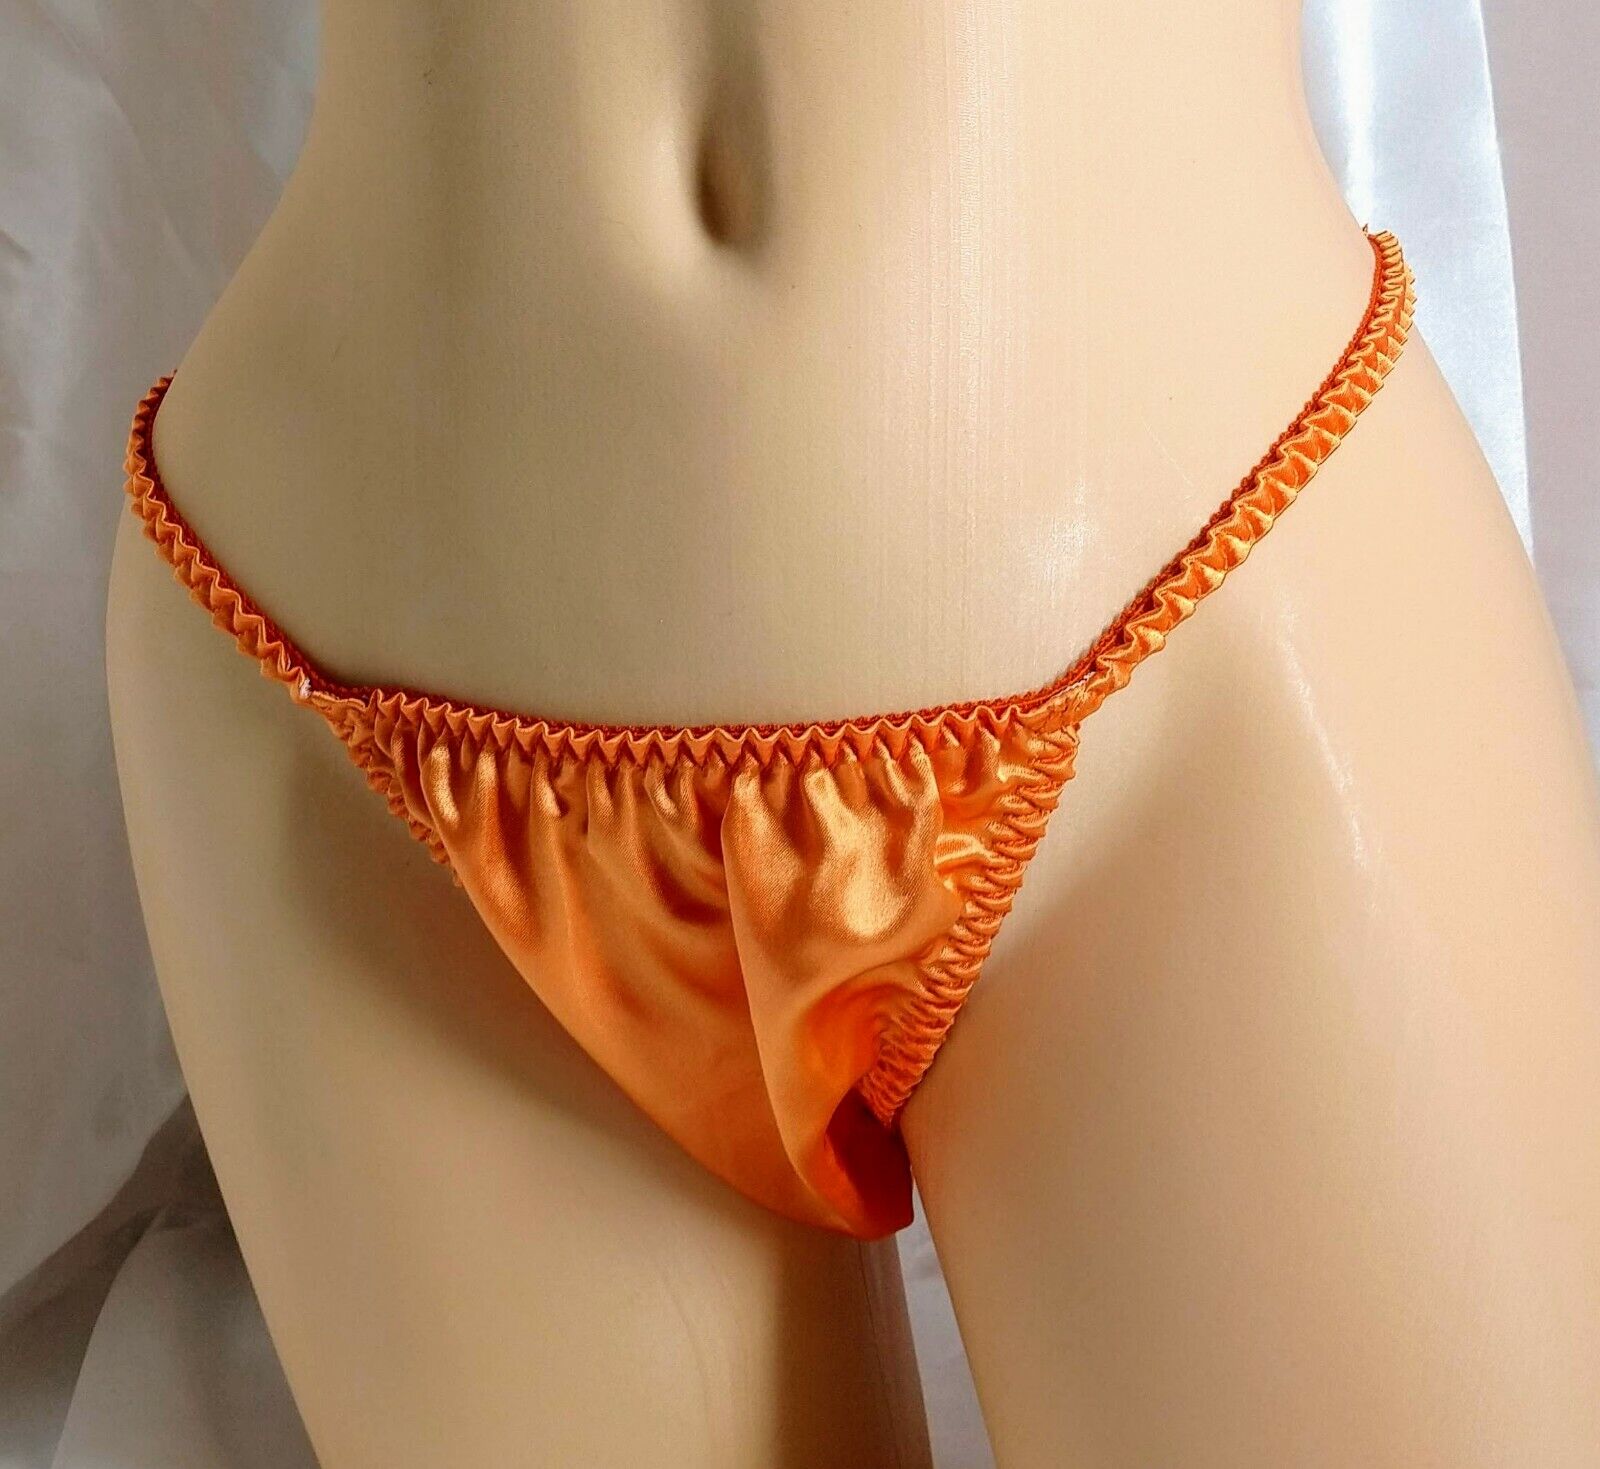 Orange Satin String Bikini panties, classic style for women and men! 